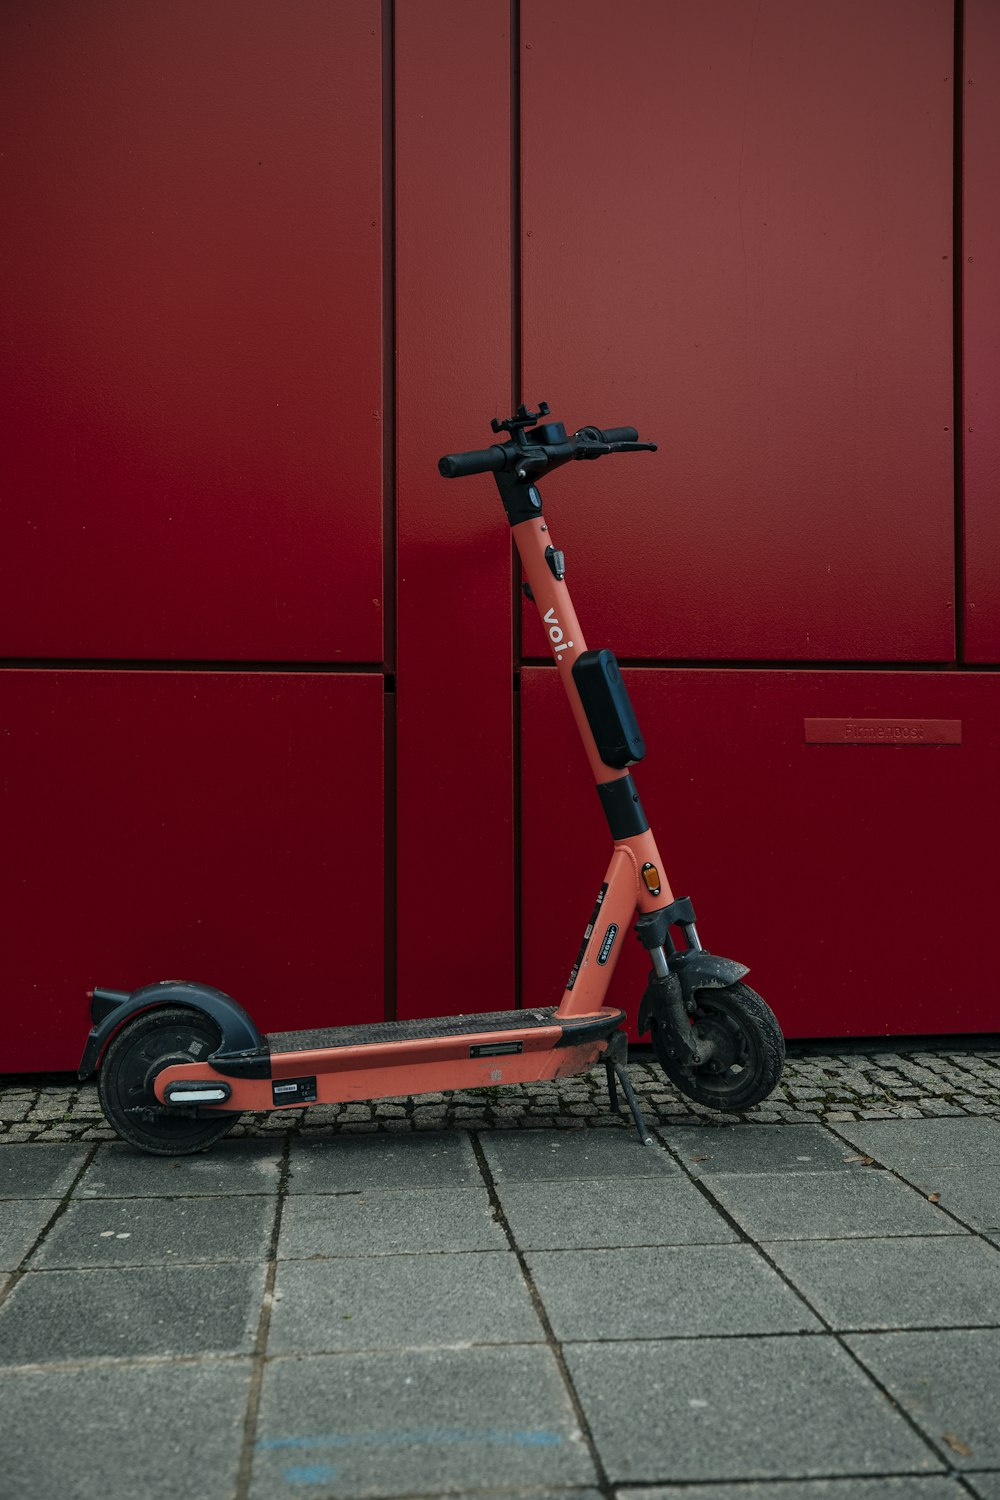 Un scooter naranja estacionado frente a una pared roja